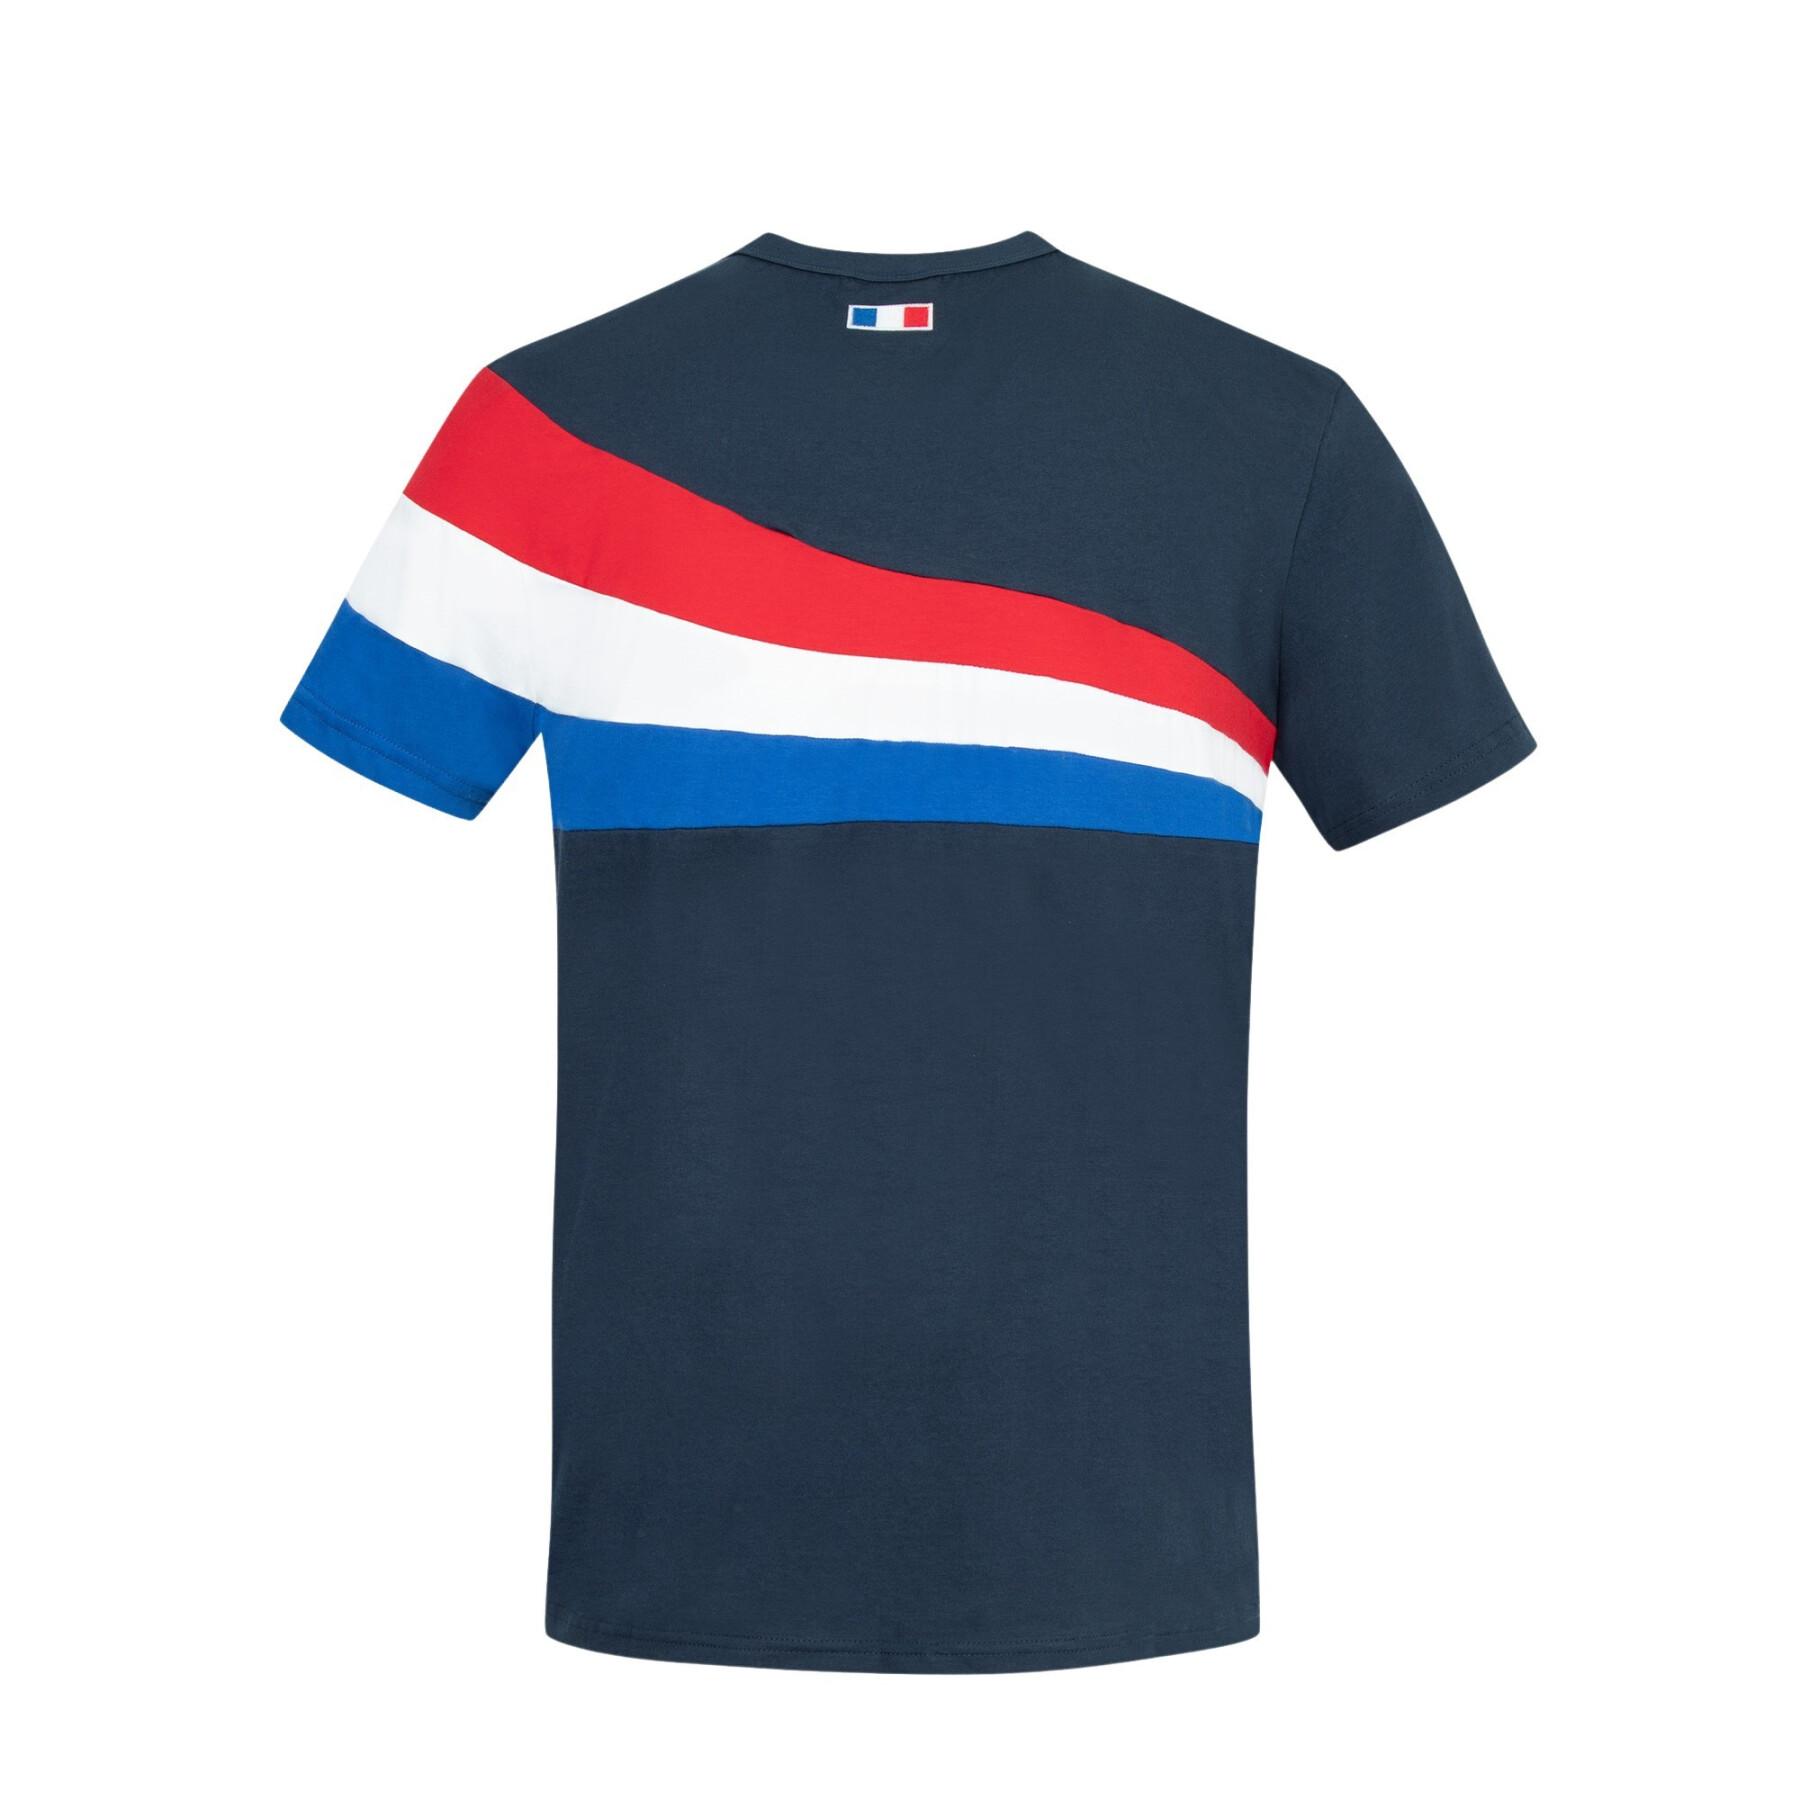 Presentation T-shirt XV de France